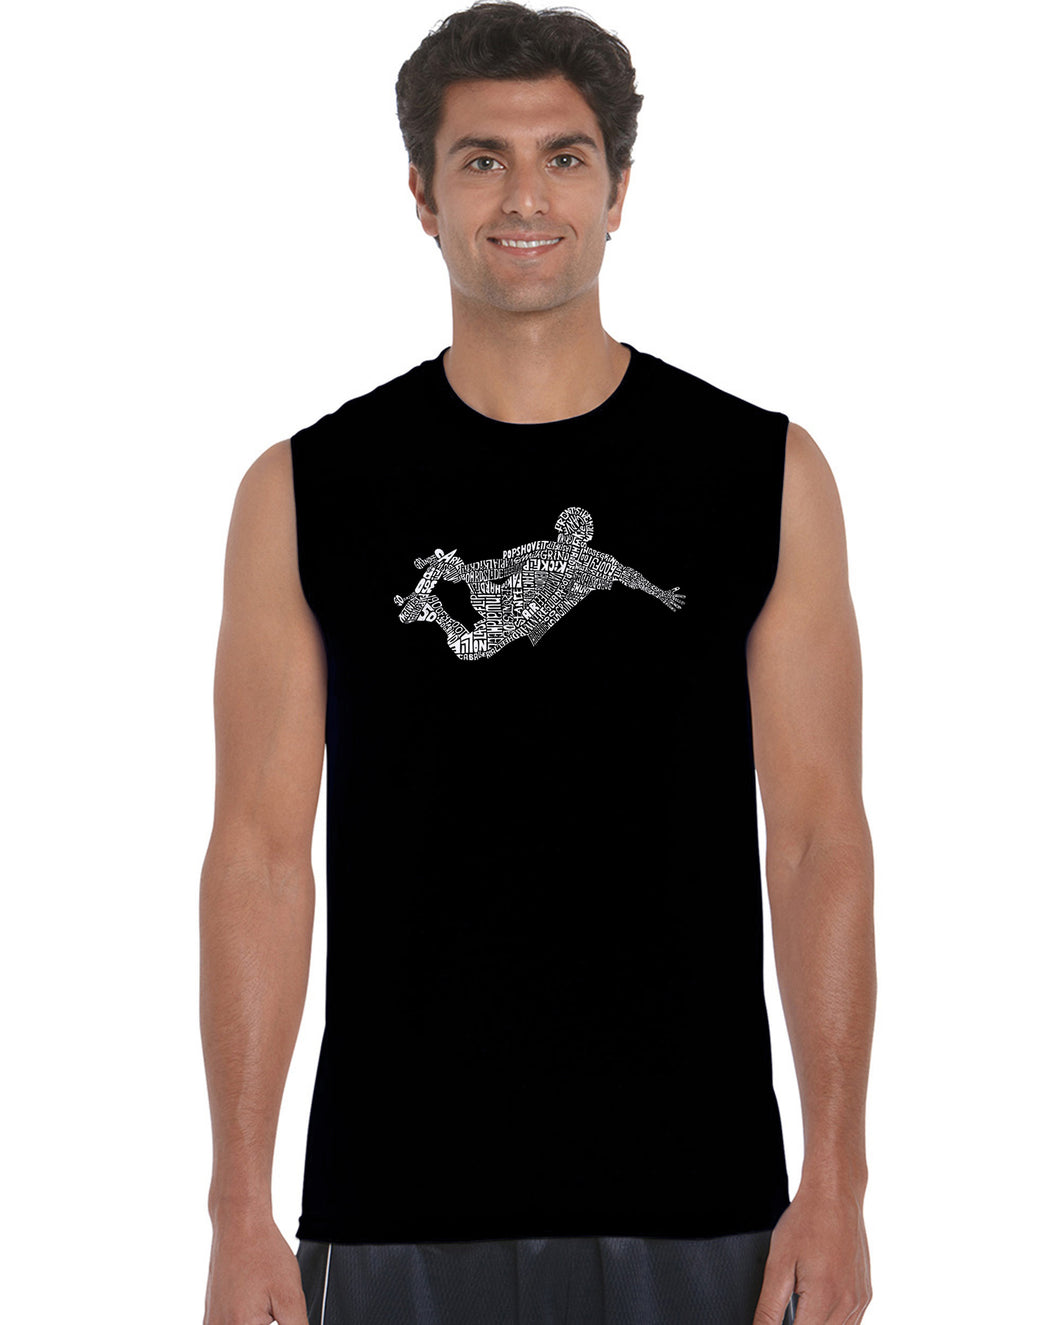 POPULAR SKATING MOVES & TRICKS - Men's Word Art Sleeveless T-Shirt